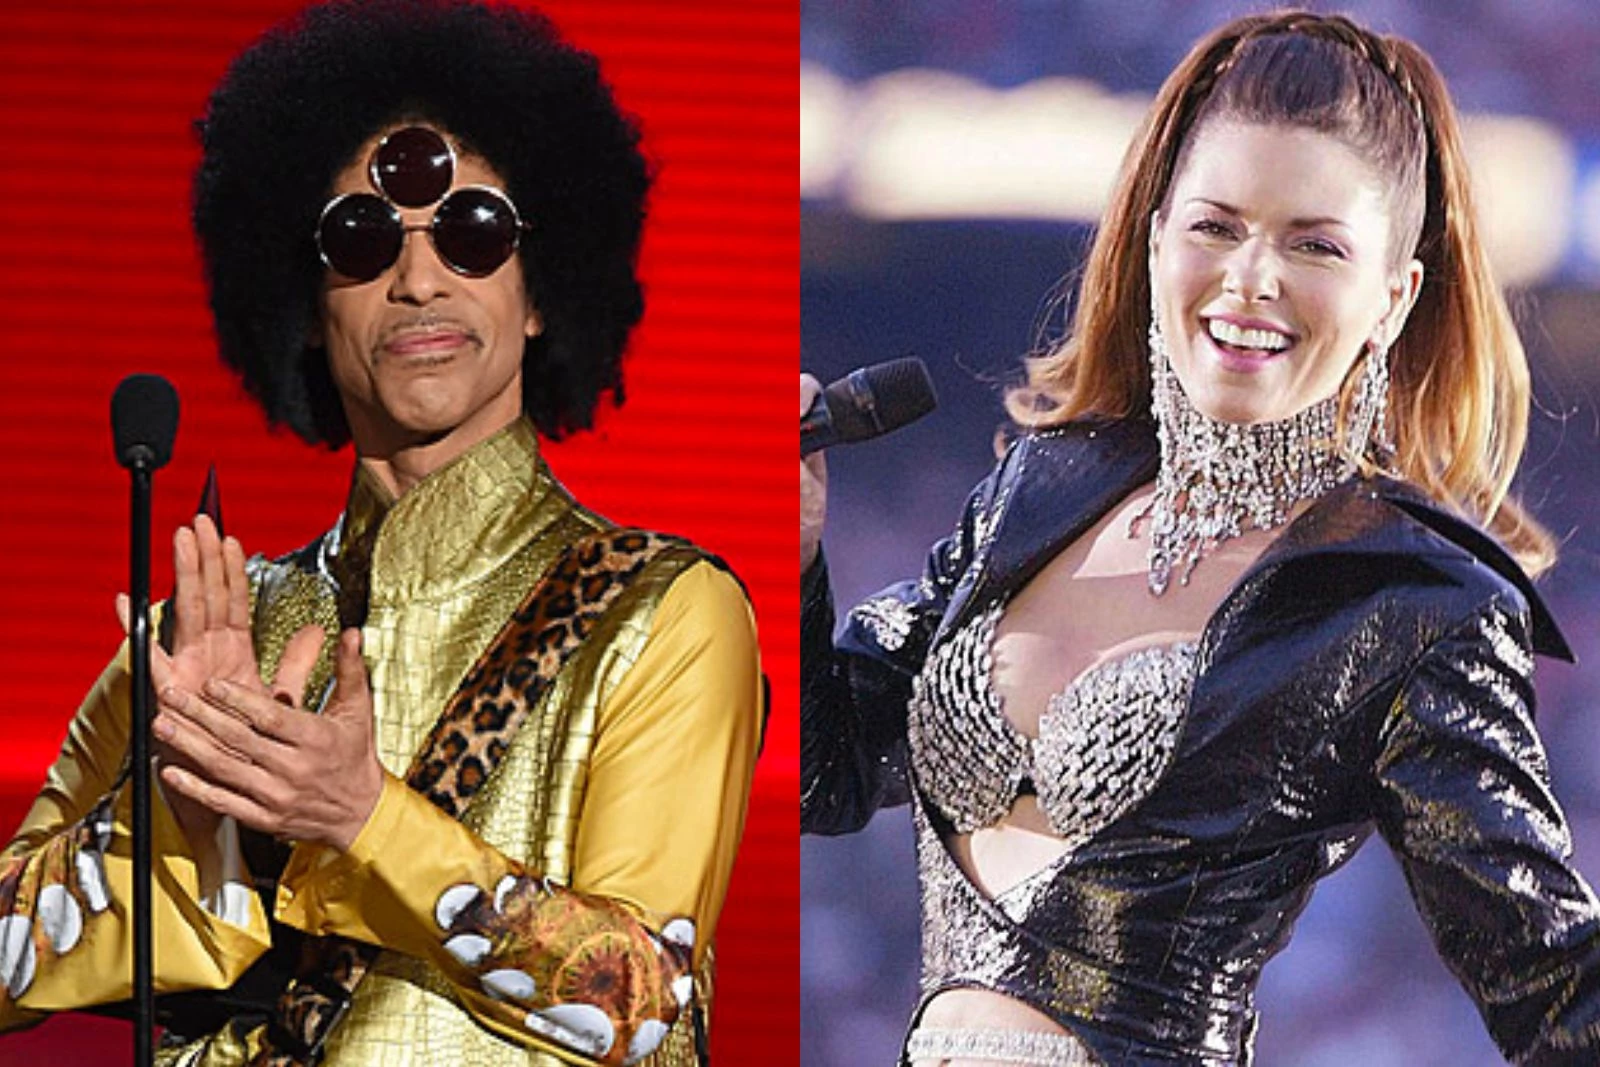 Prince Invited Shania Twain to Make the ‘Next “Rumours” Album’